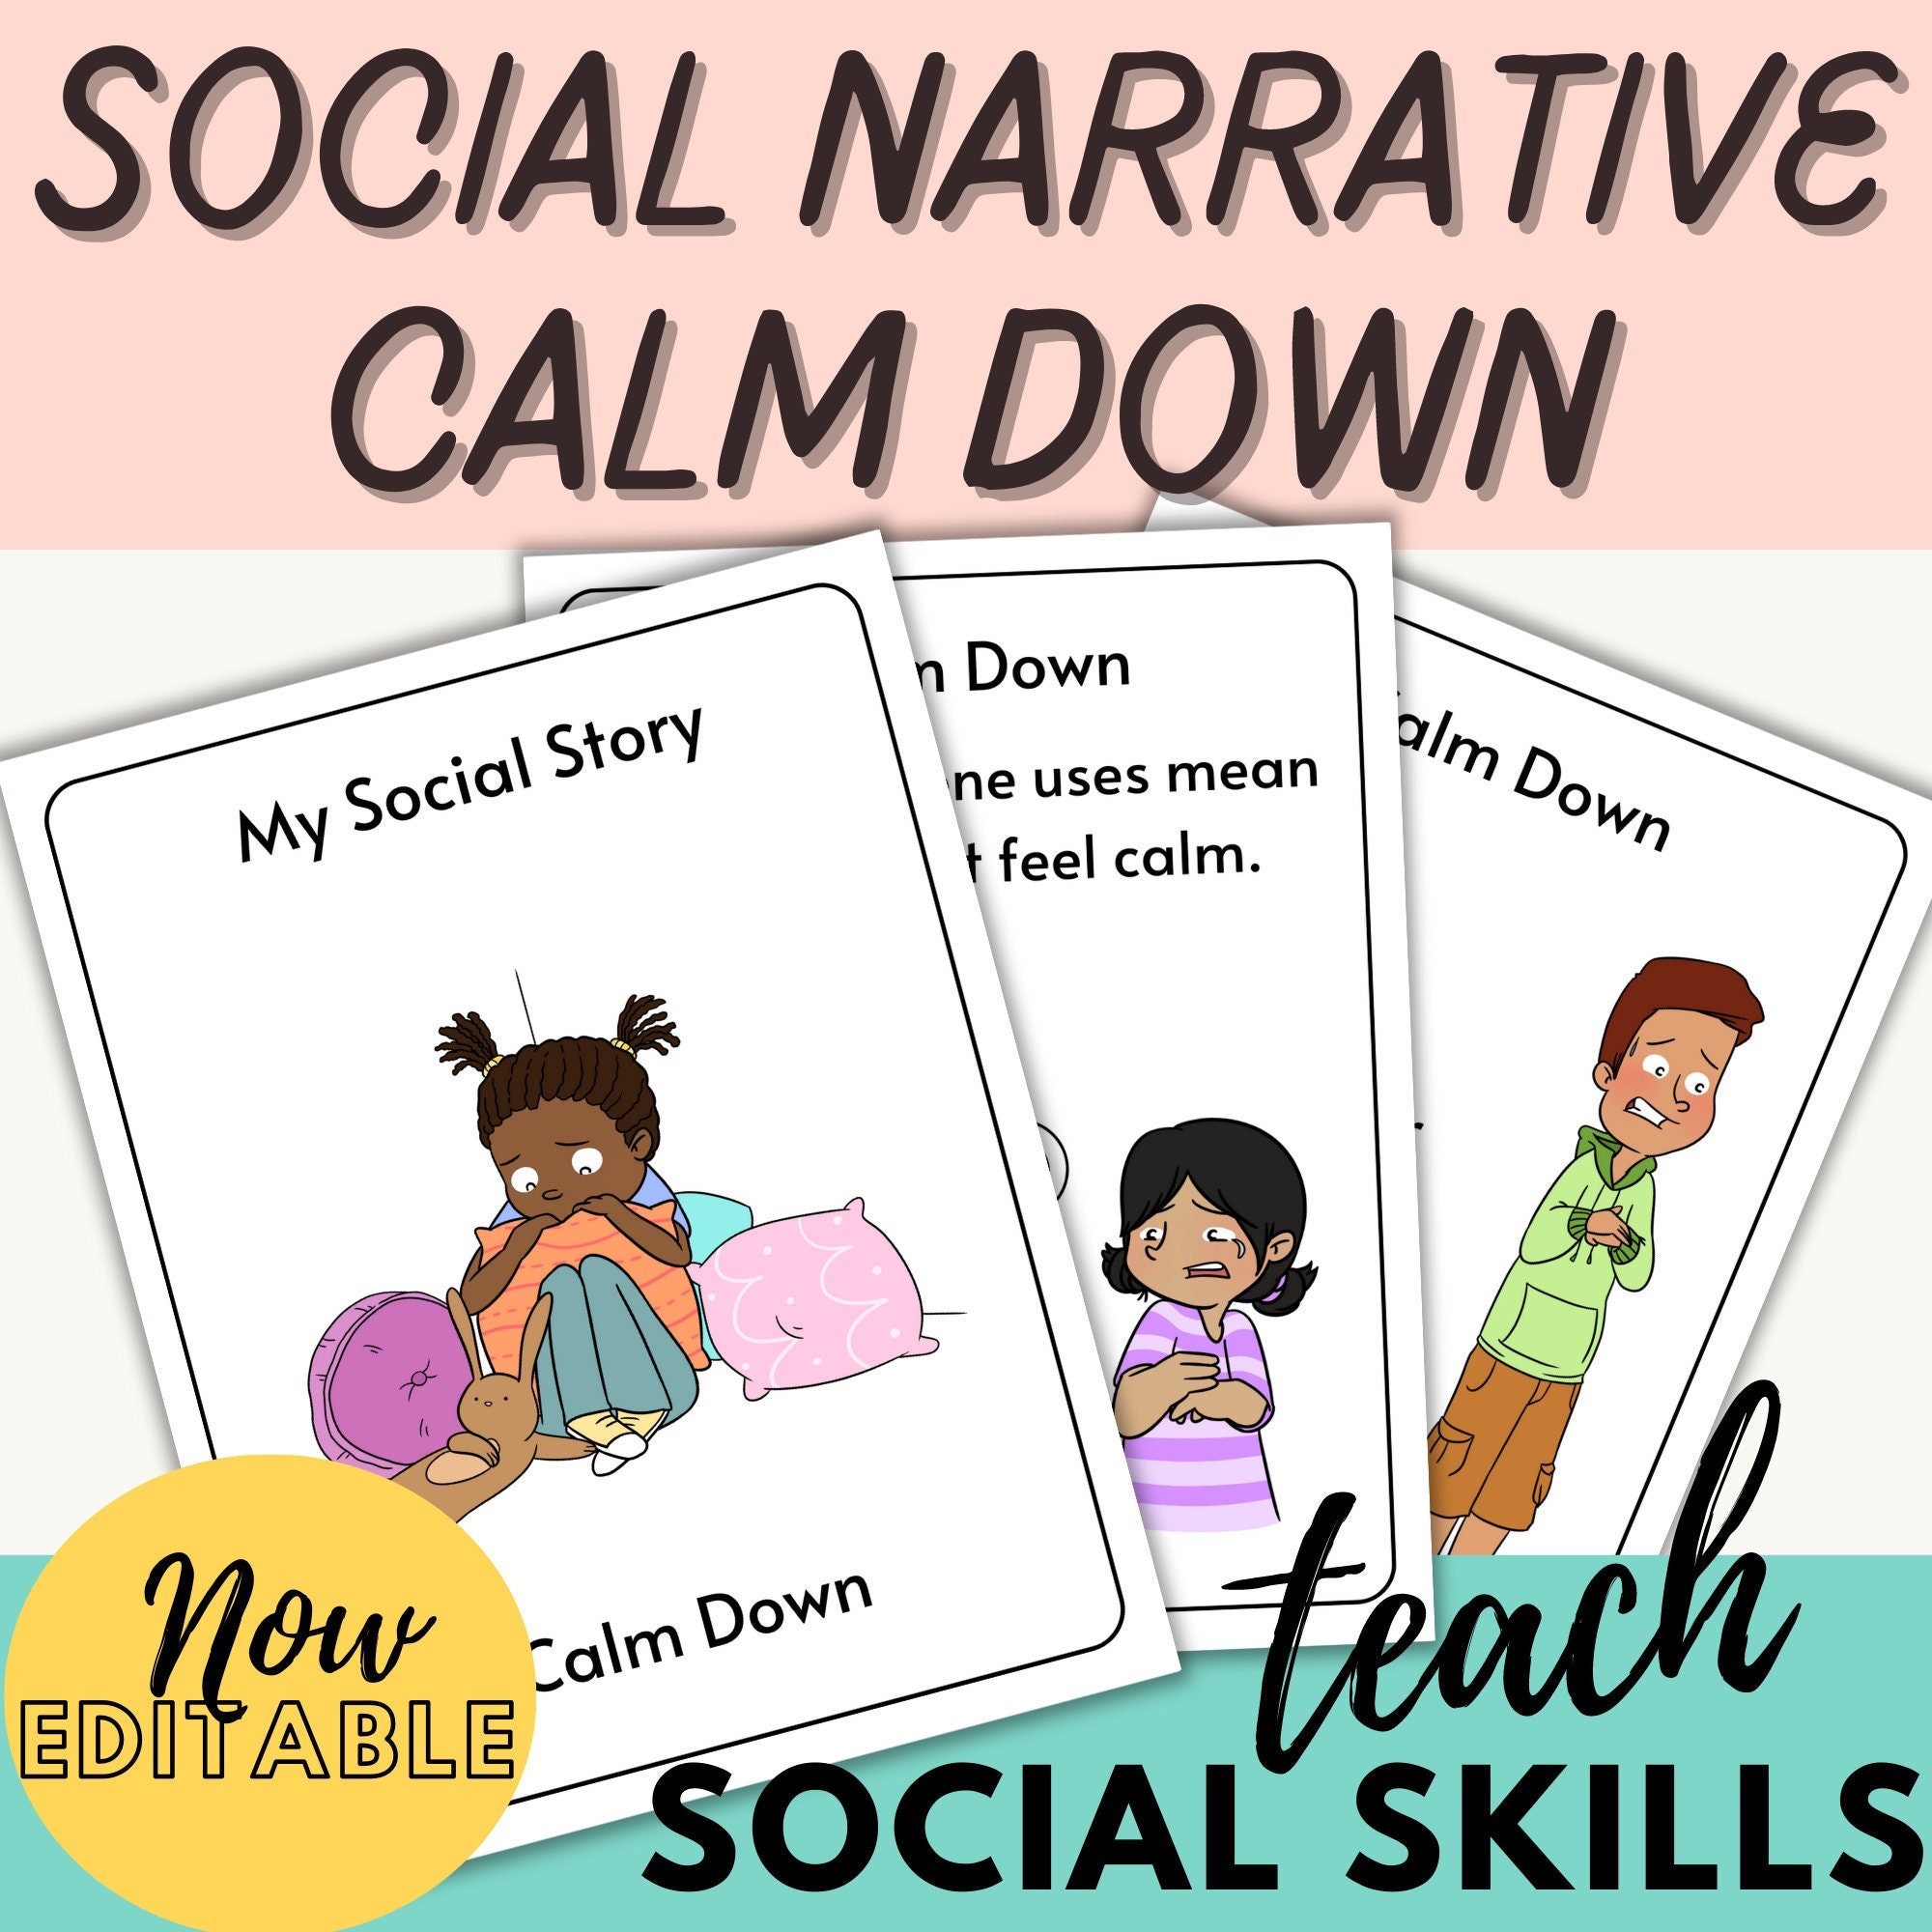 When I Calm Down (Social Skills For Kids)